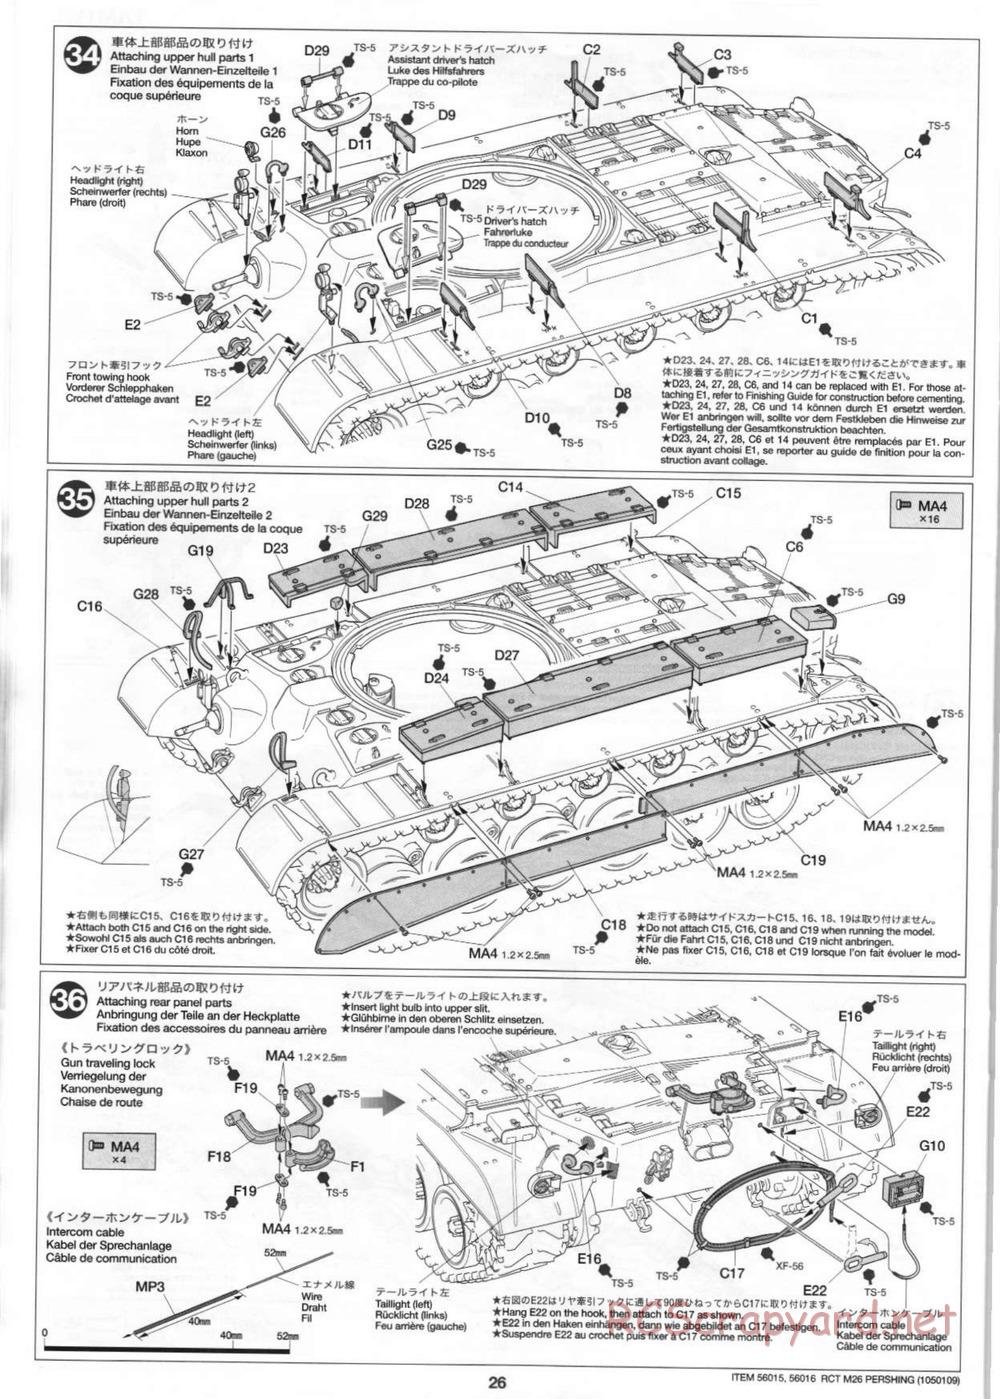 Tamiya - M26 Pershing - 1/16 Scale Chassis - Manual - Page 26